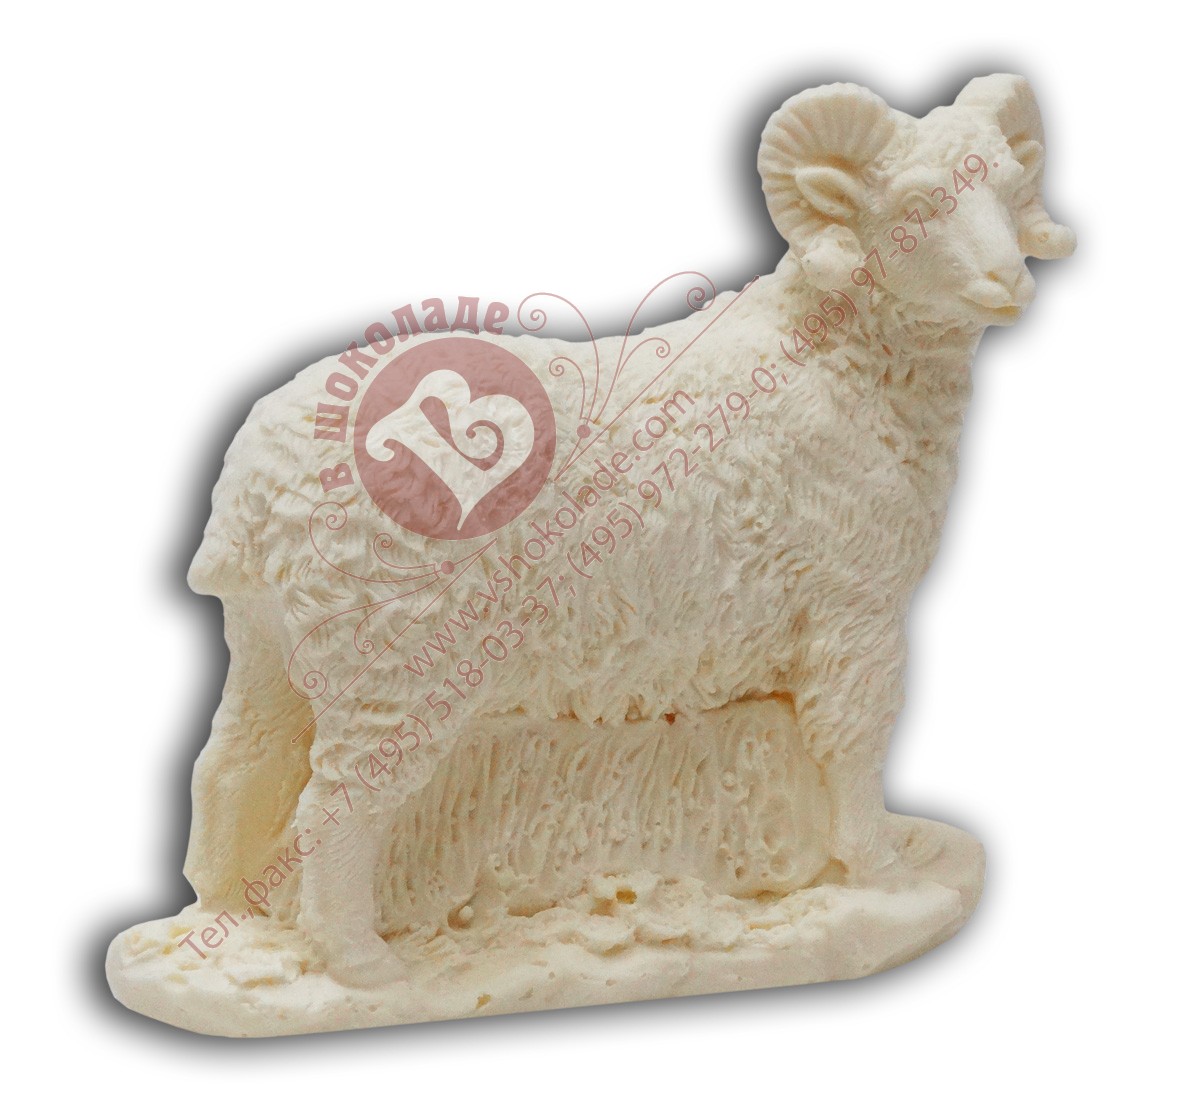 Шоколадная овечка - символ 2015 года. Артикул 2015 ovs_004